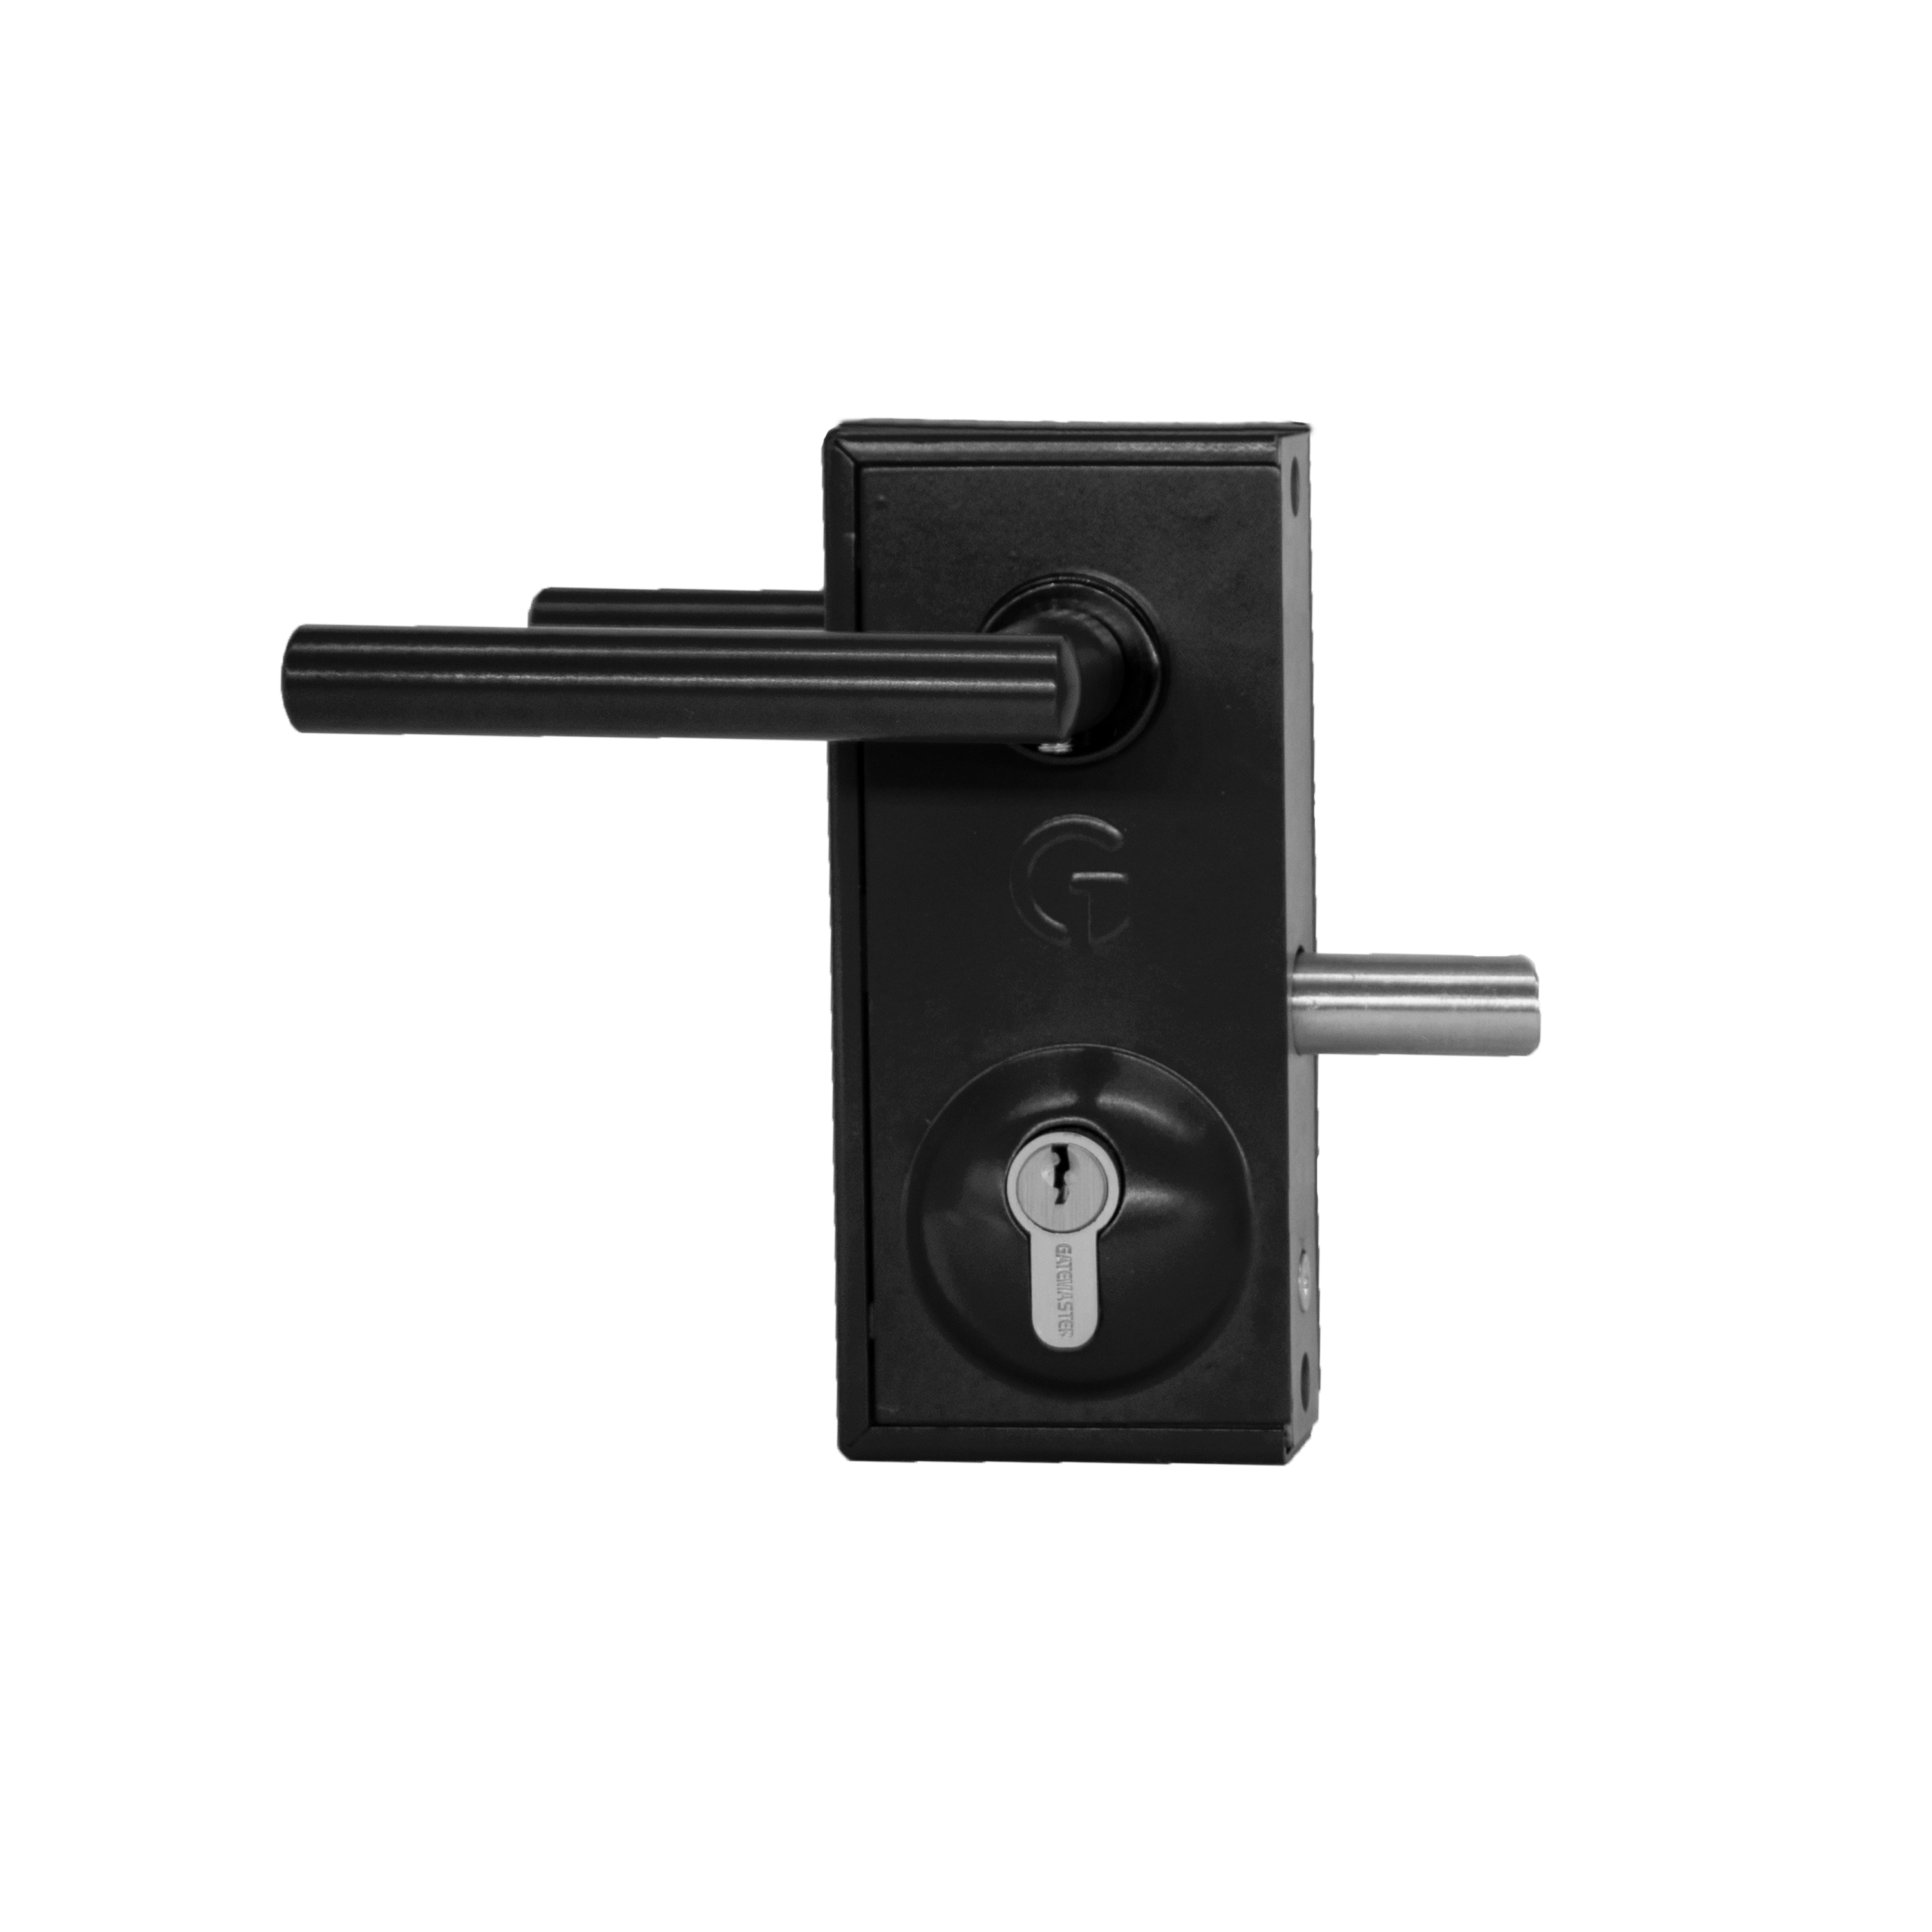 Products - Gatemaster Locks